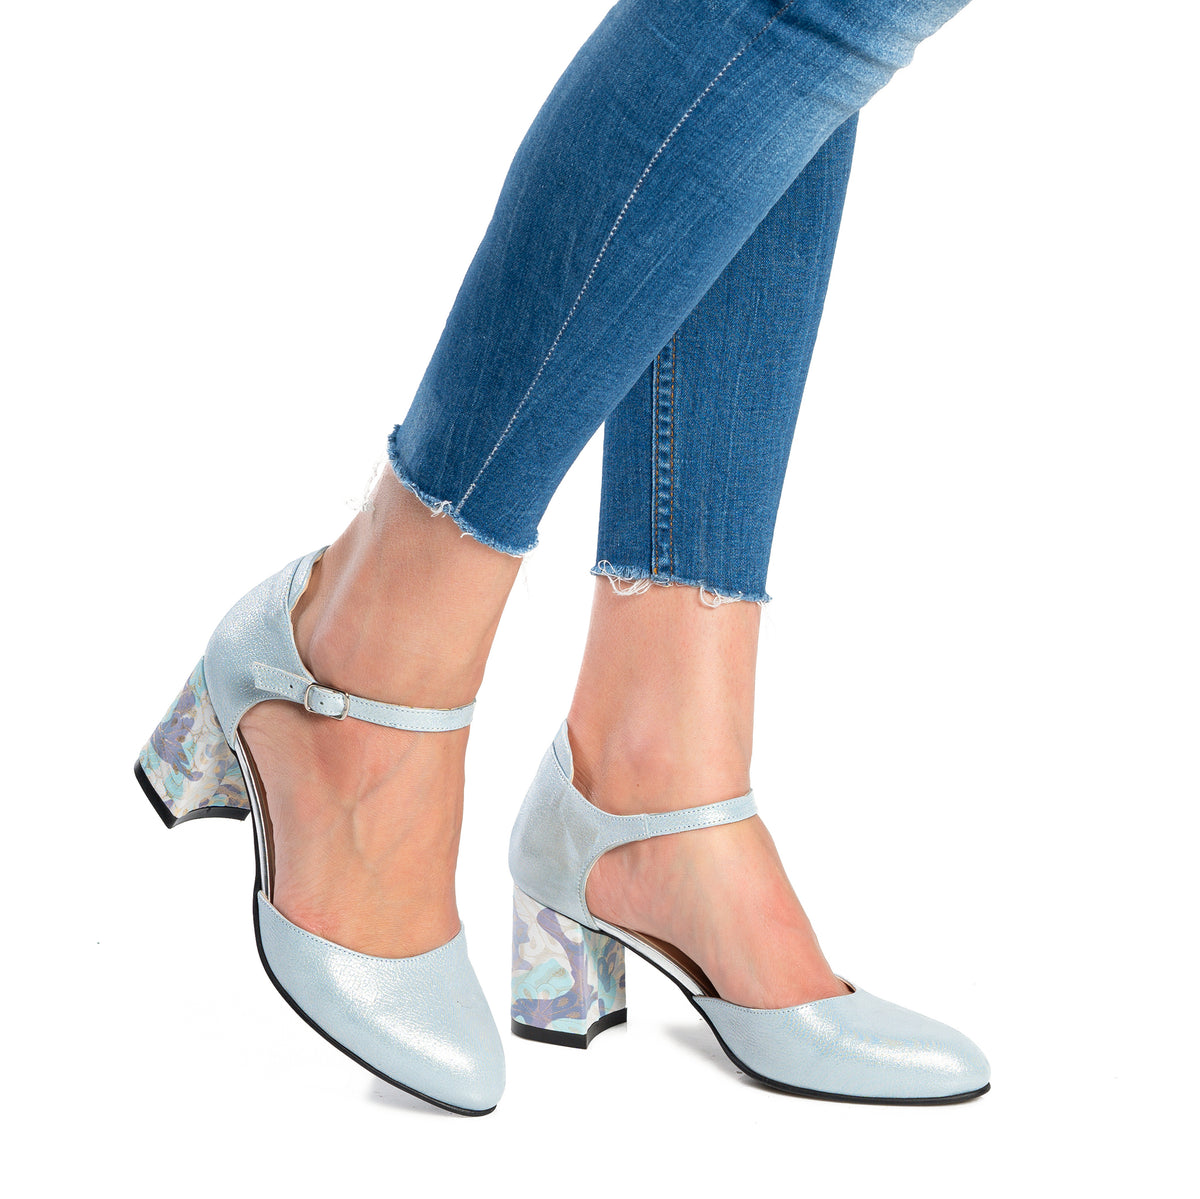 Pantofi Eleganti Dama din piele Naturala,Annet,blue